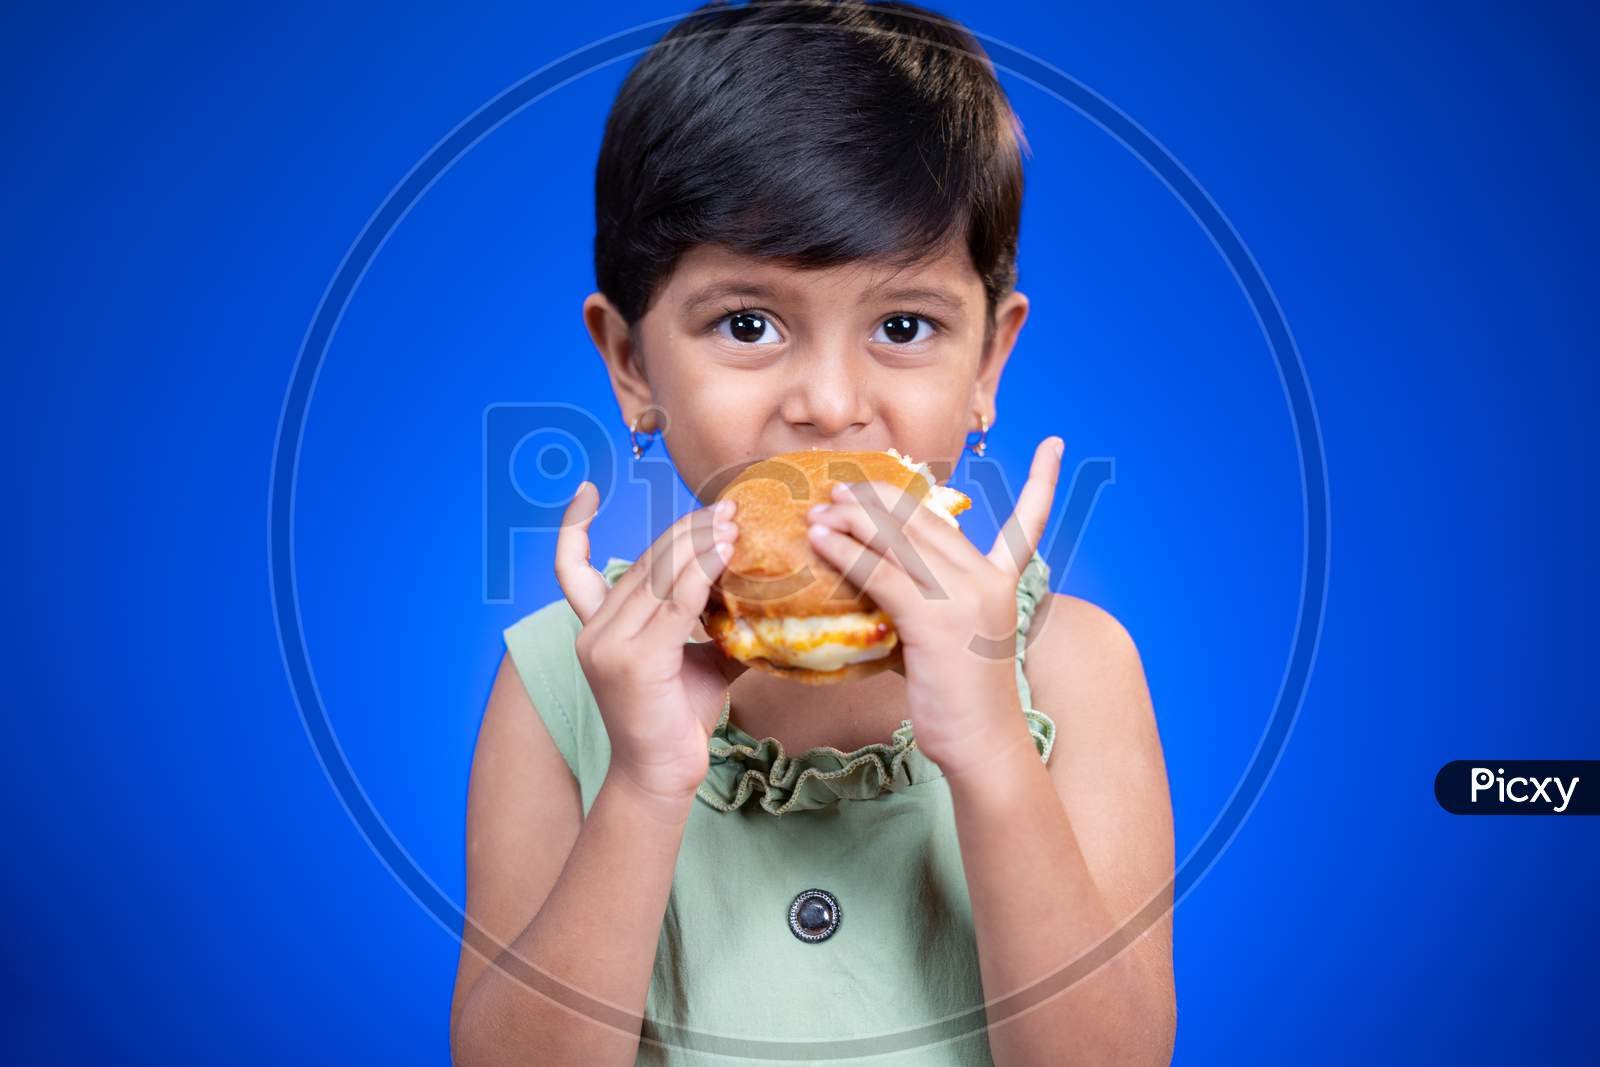 Girl Kid Enjoying Eating Of Tasty Burger On Blue Background - Concept Of Children Unhealthy Eating Habits.